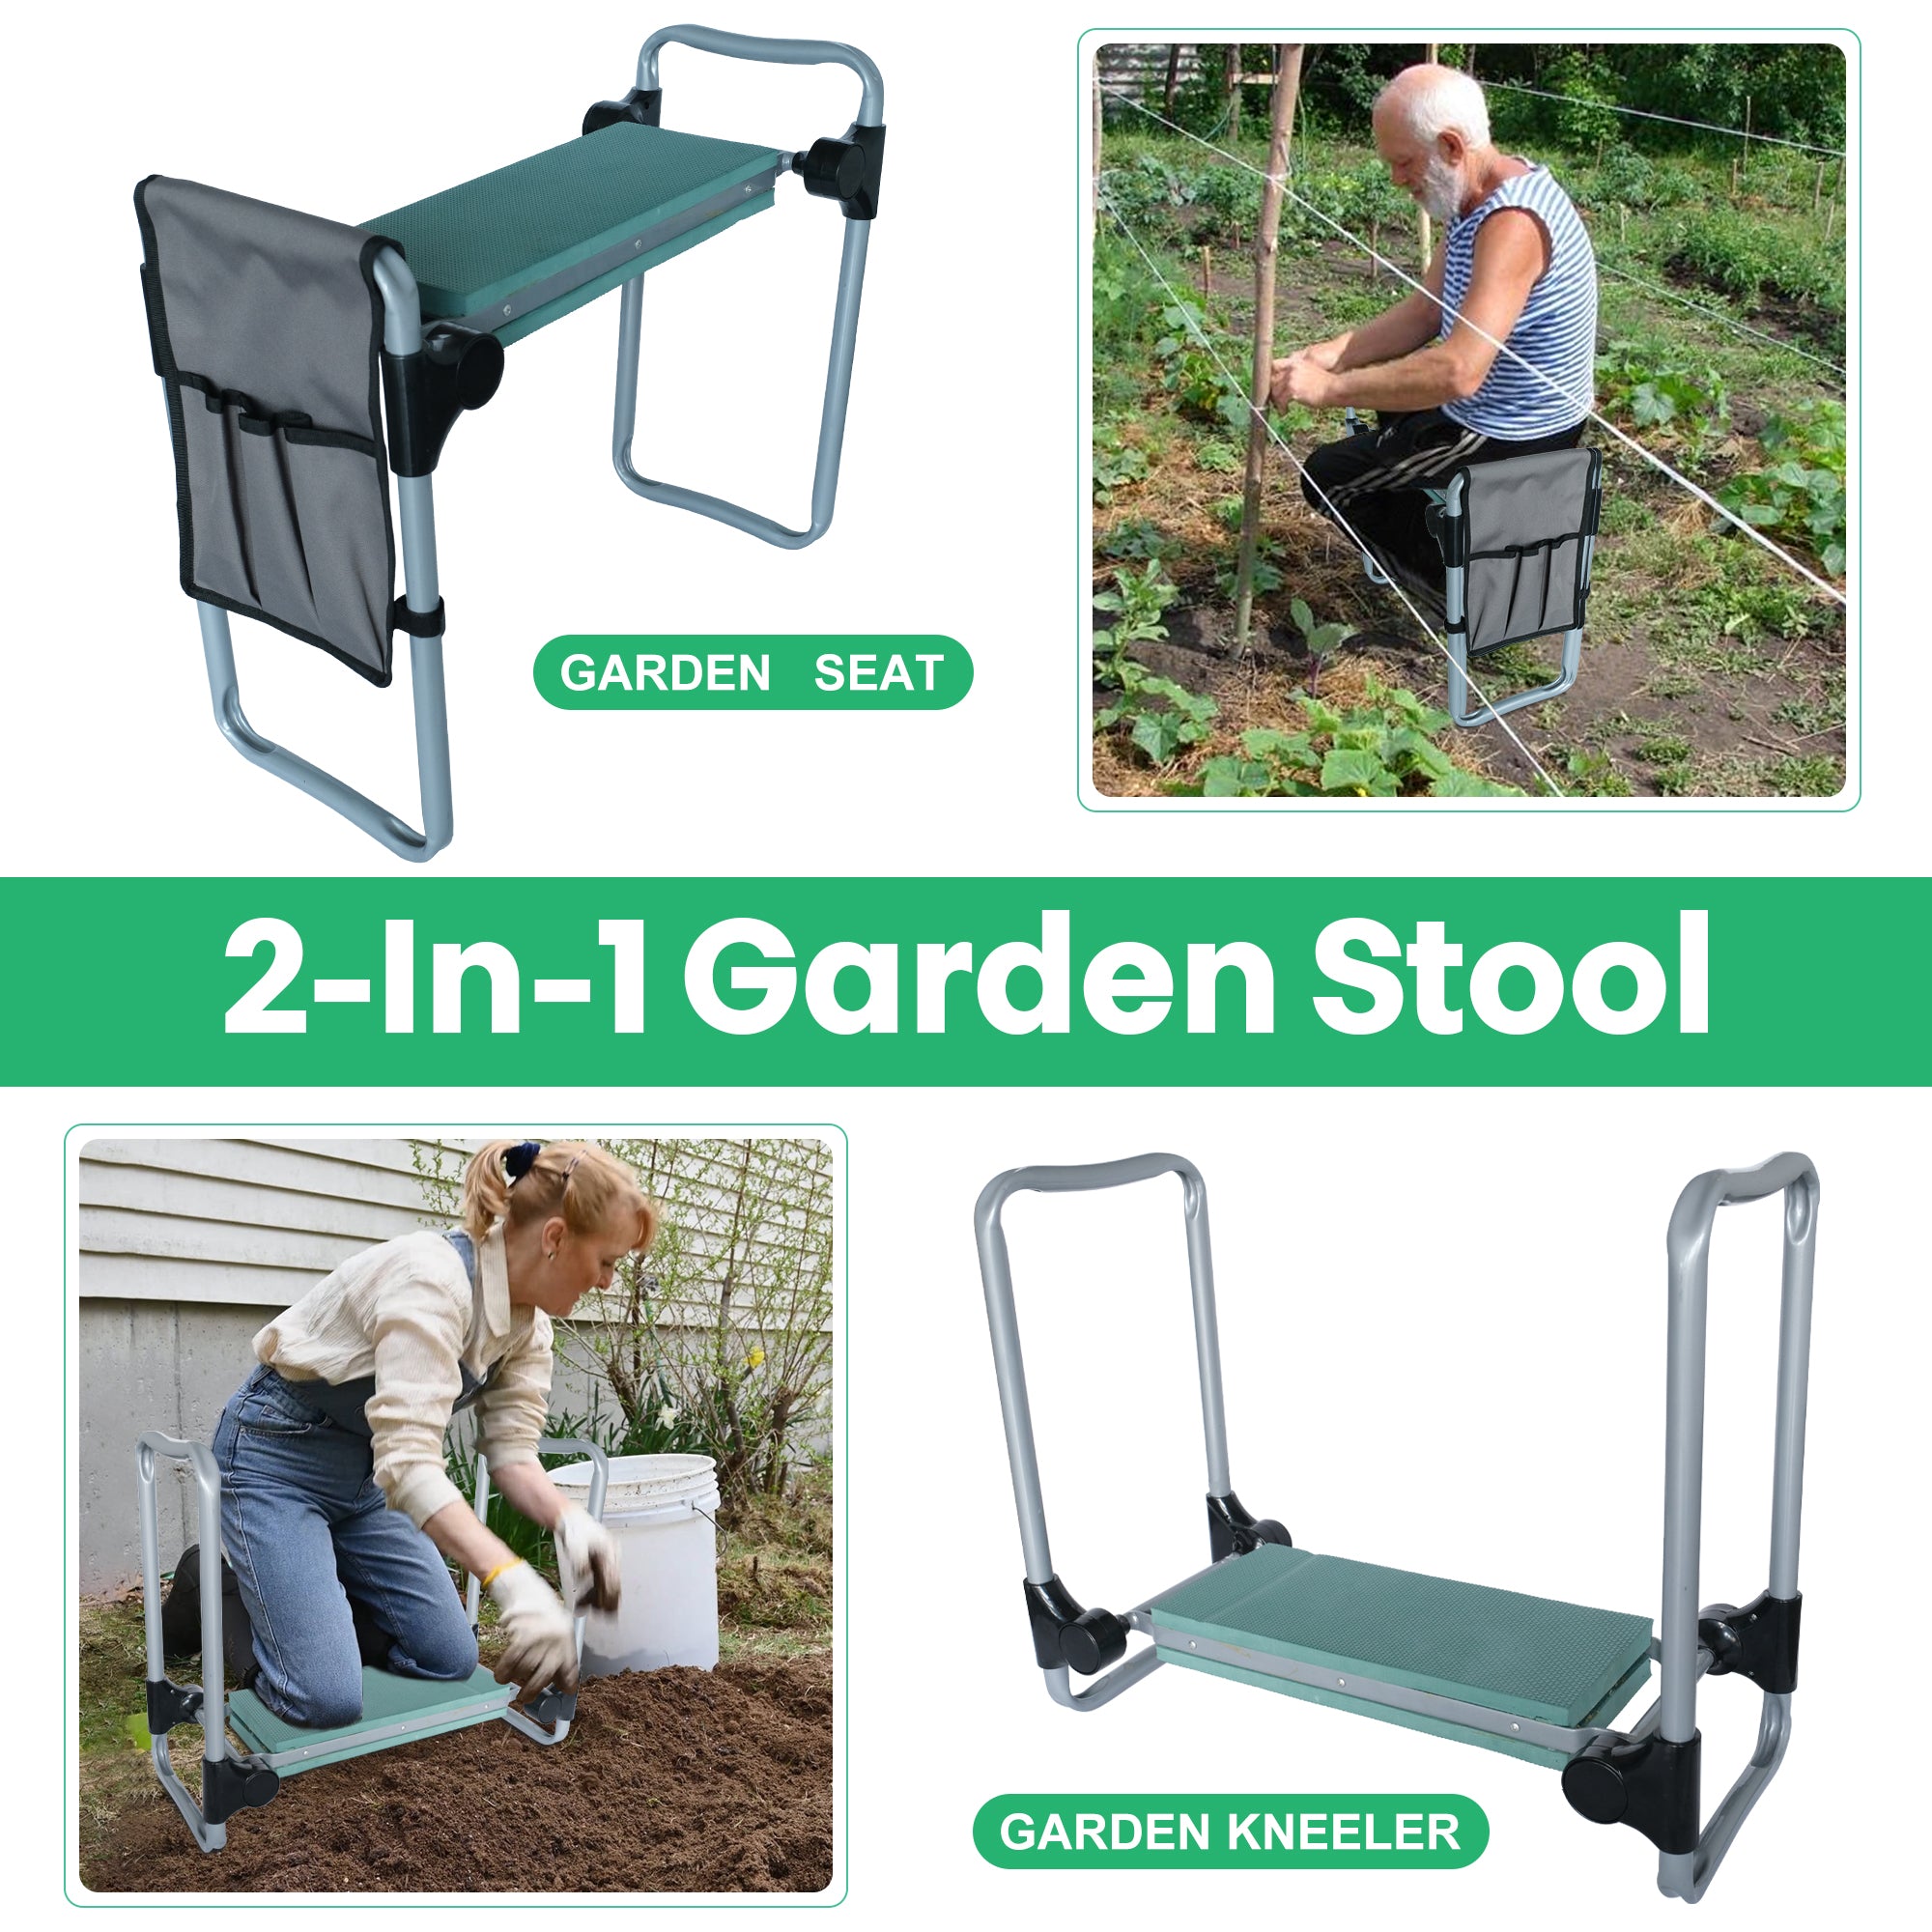 LUCKYERMORE Garden Kneeler Seat Stool with Tool Pocket and Soft EVA Kneeling Pad, Green